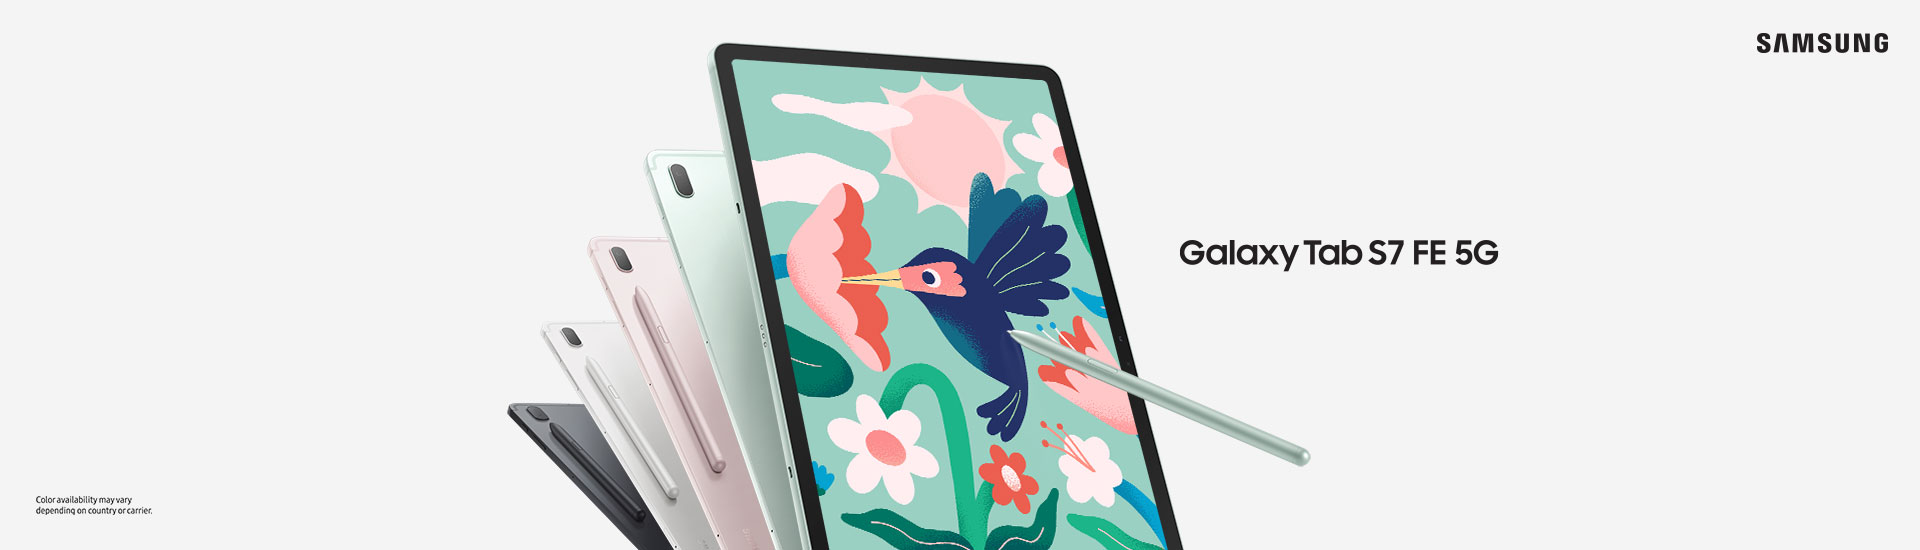 Samsung Galaxy Tab S7 FE 5G add-on $208/mth up upon 5G SIM Subscription